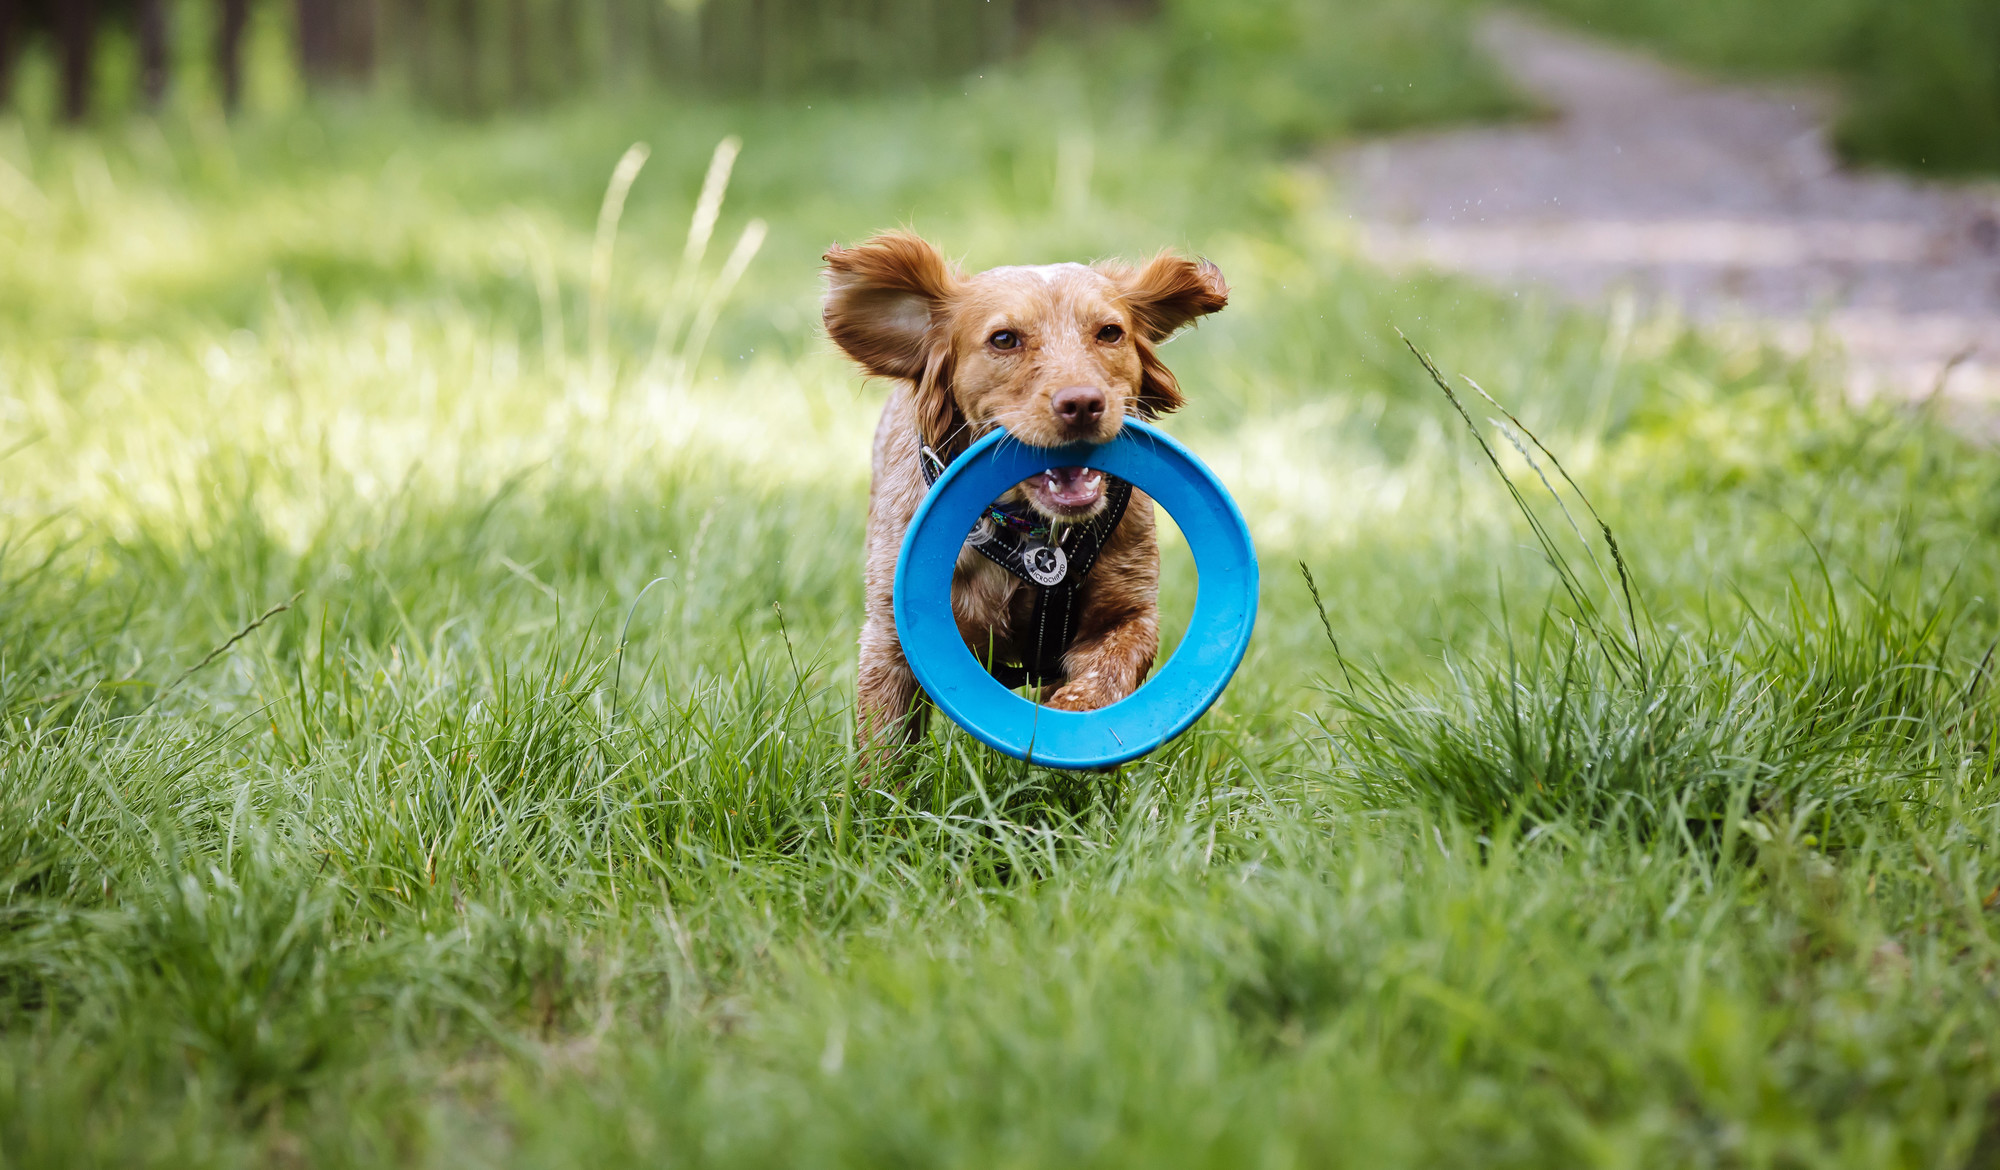 A brown dog runs through the grass with a blue frisbee in their mouth.